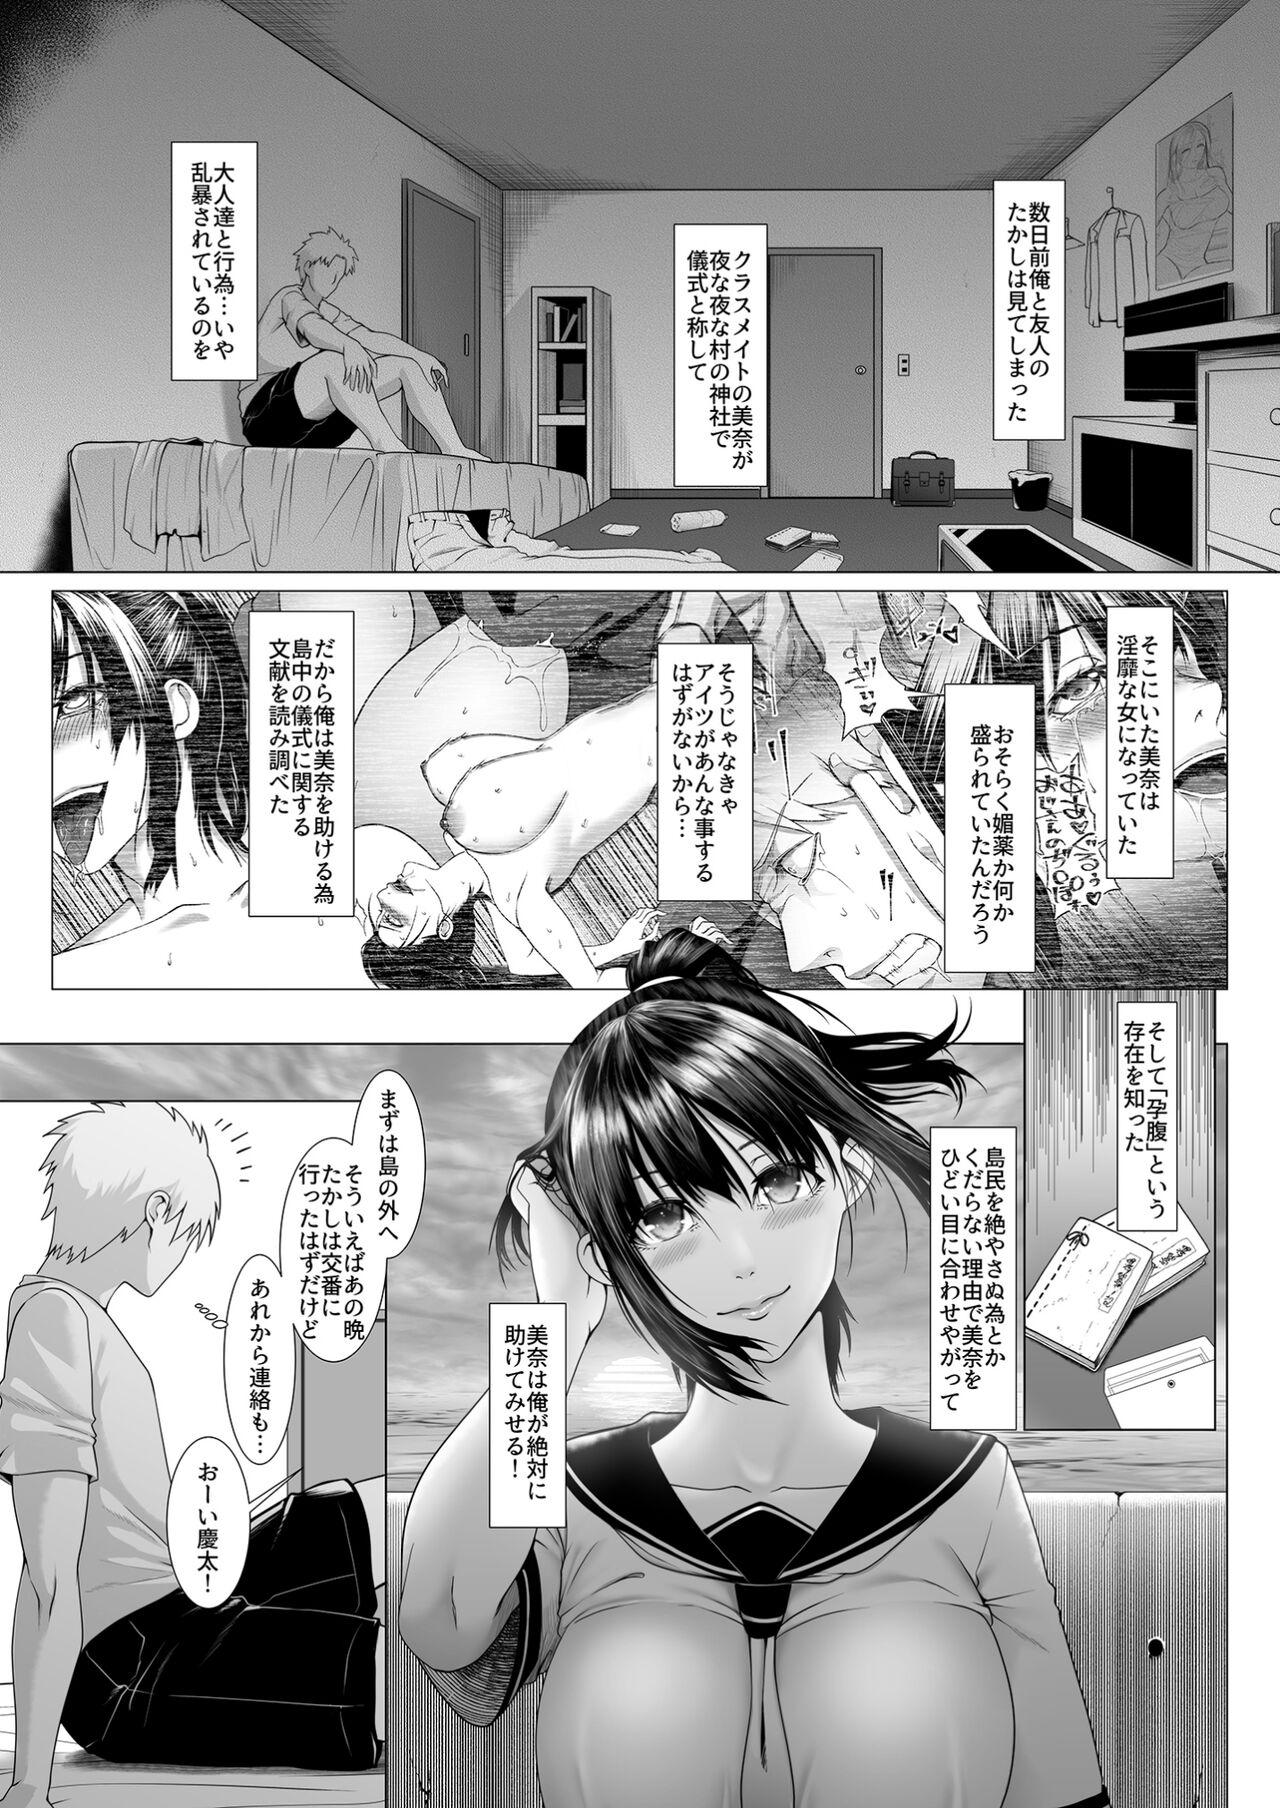 Tall Haramase no Shima 4 - Original Bro - Page 3